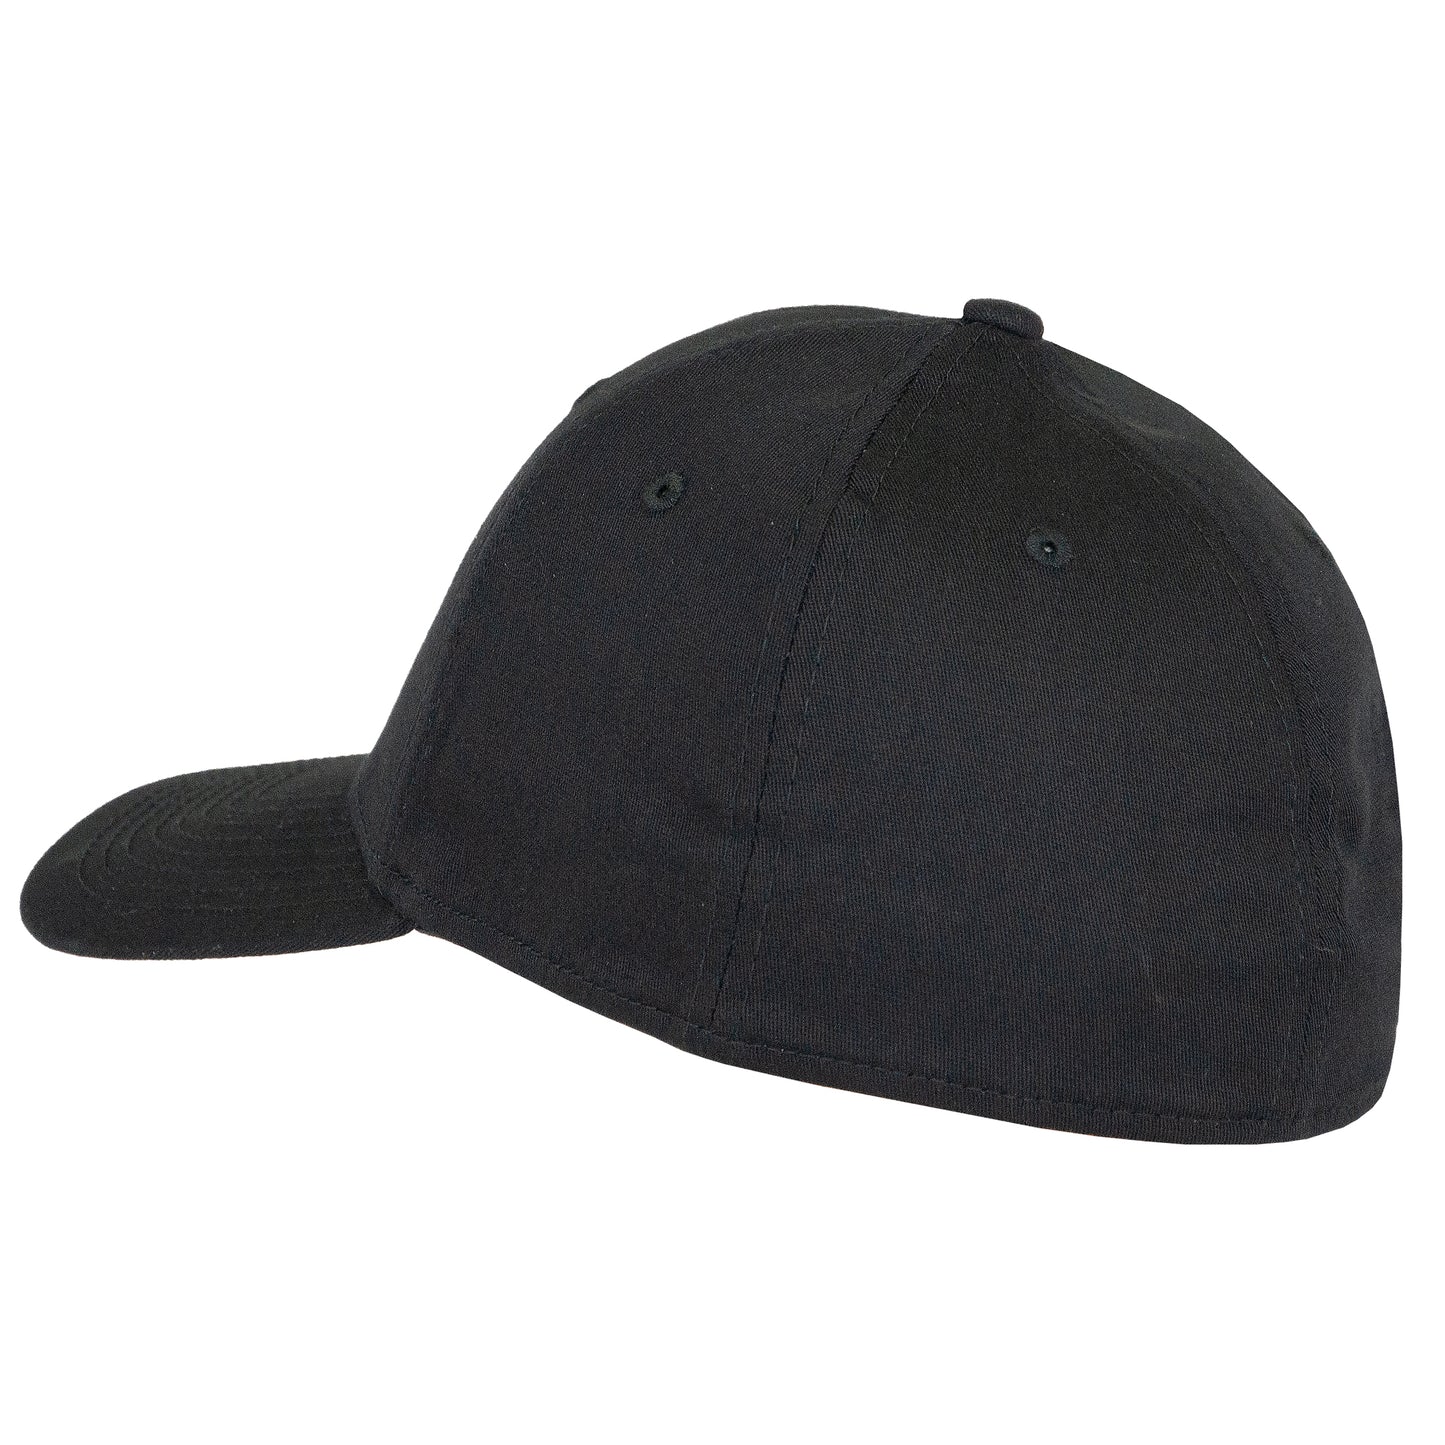 LRP New Era Sized Hat - Black